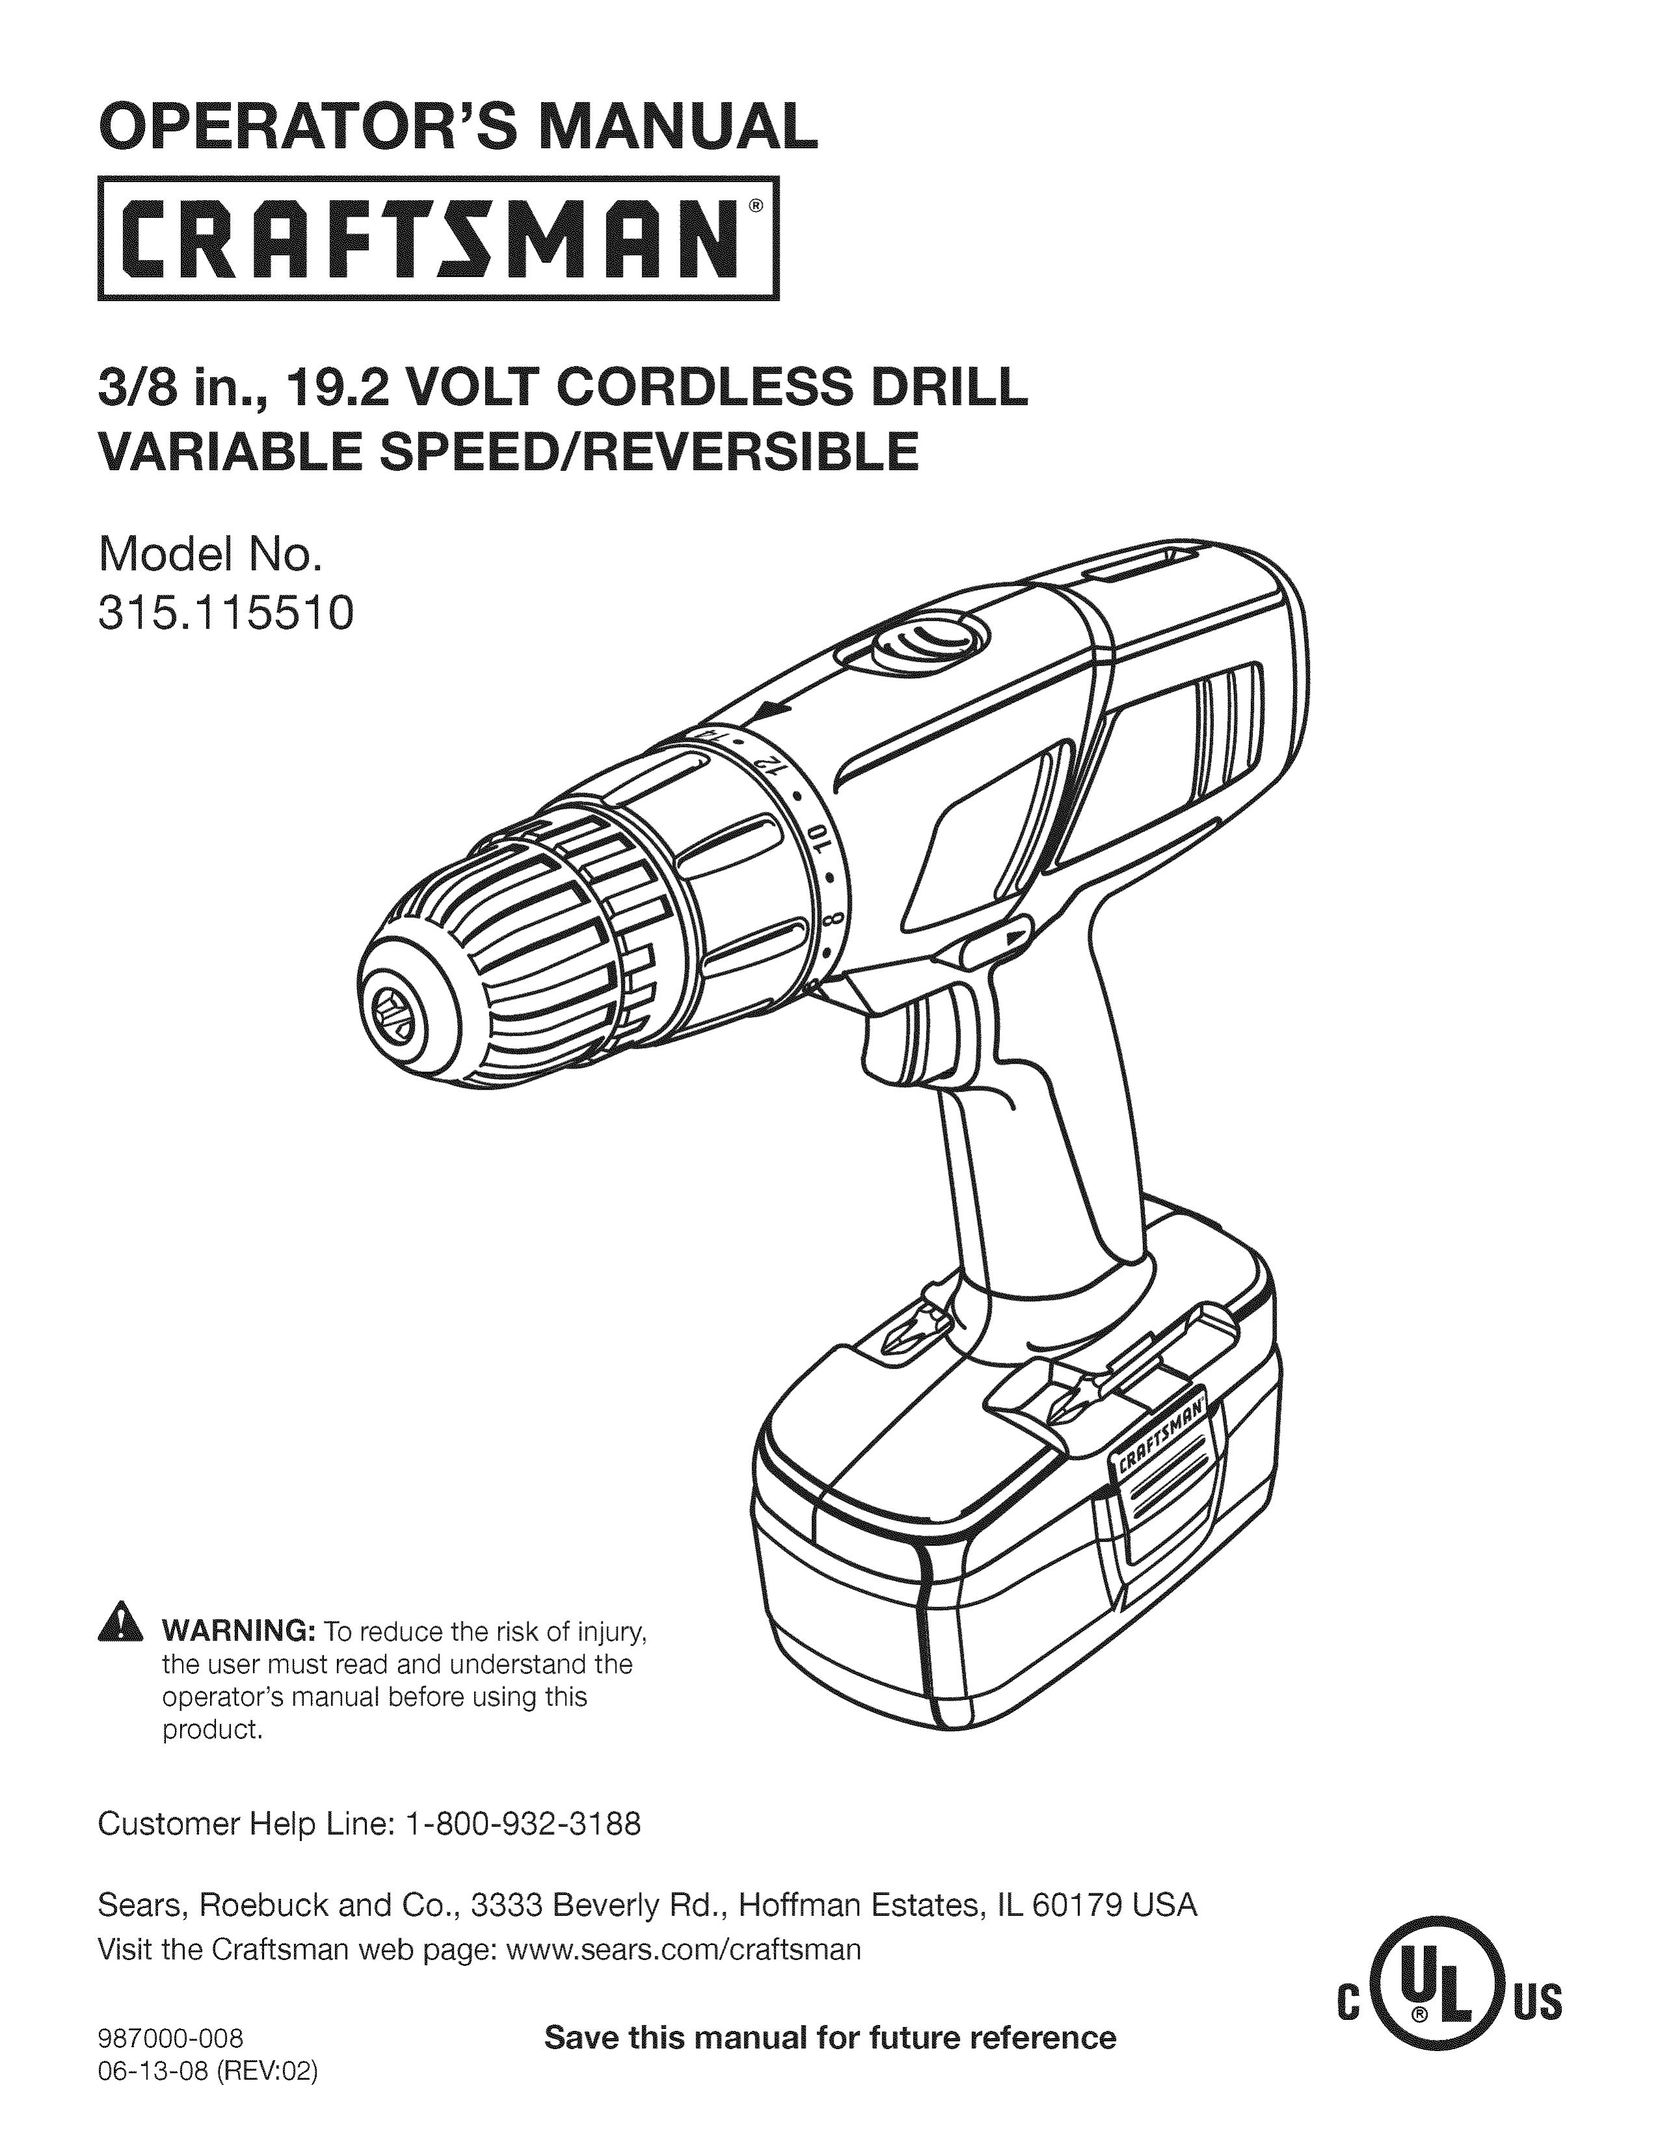 Craftsman 315.115510 Cordless Drill User Manual